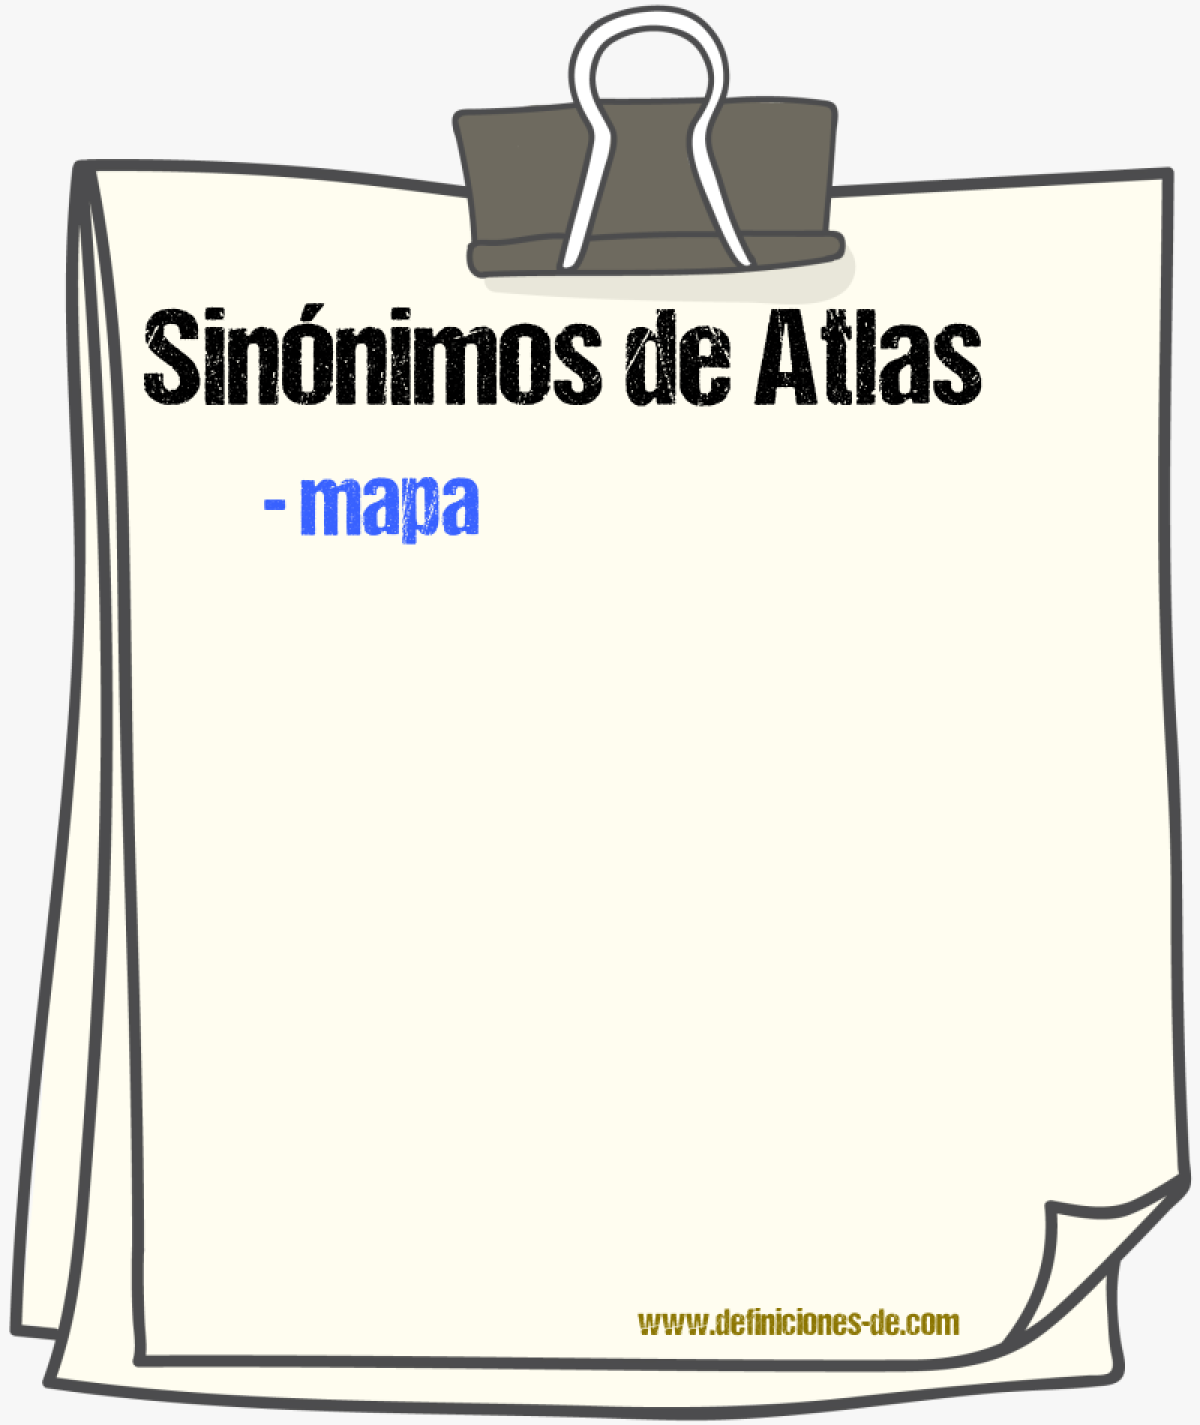 Sinnimos de atlas